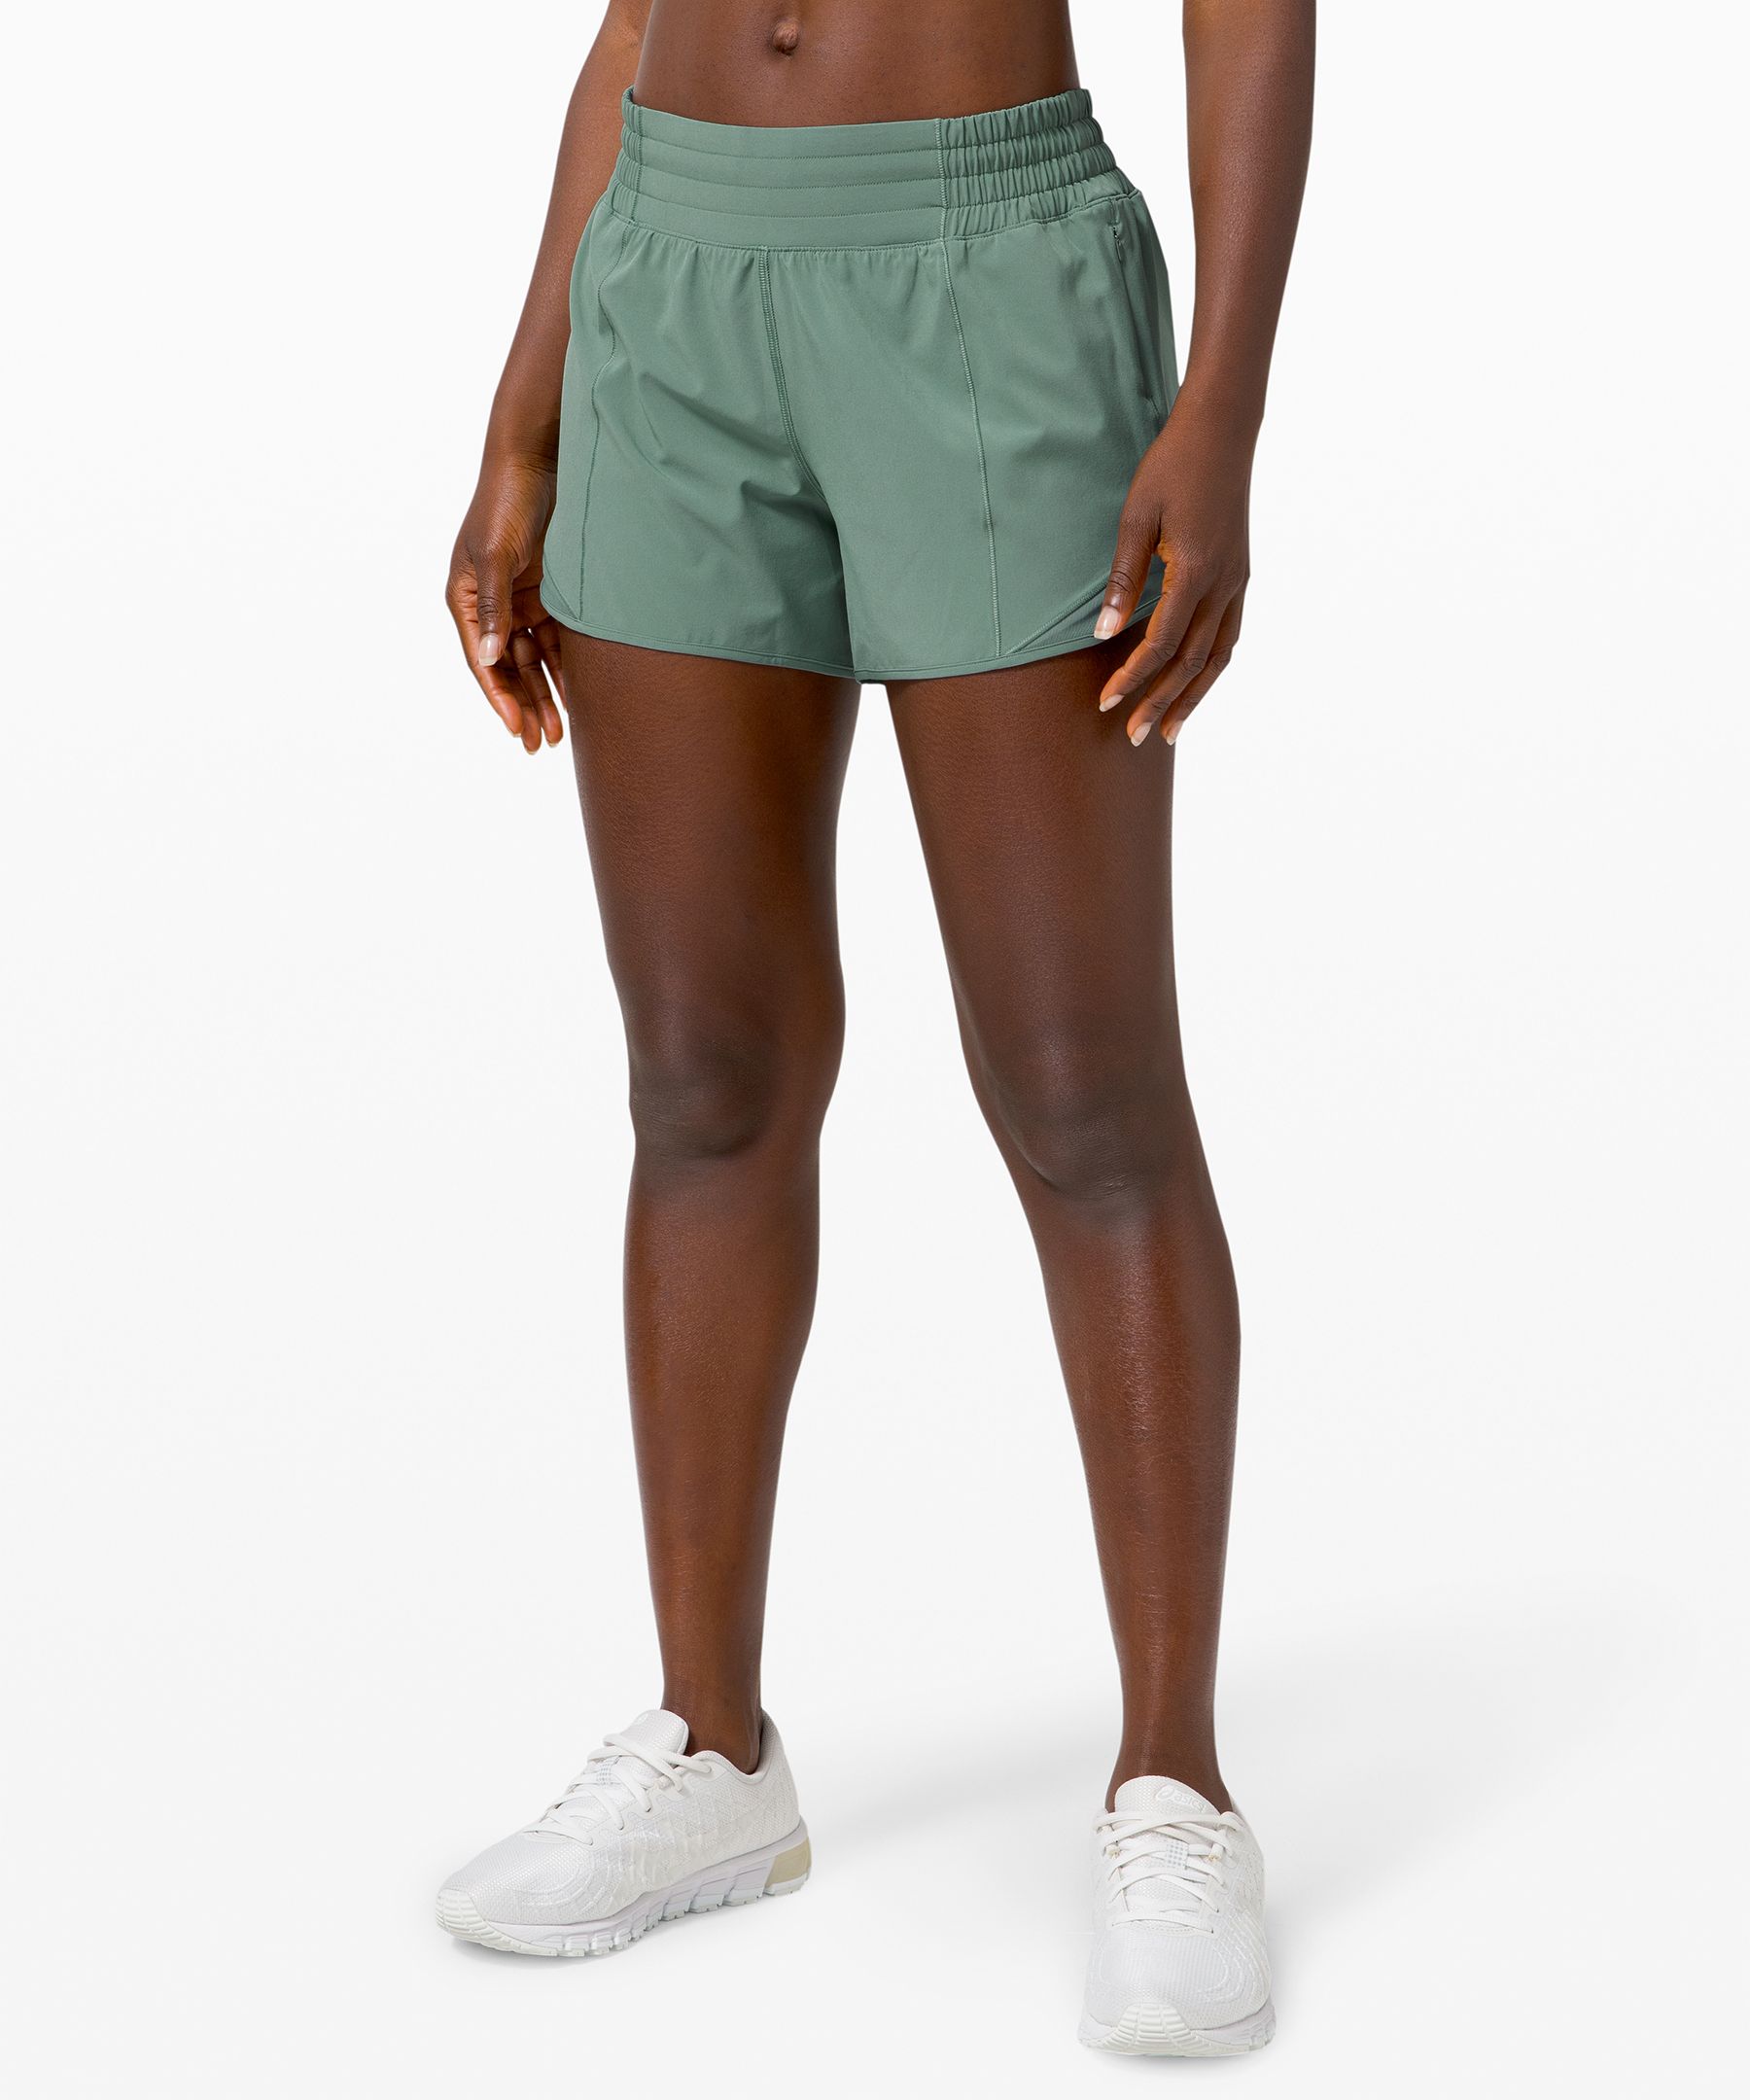 teal lululemon shorts